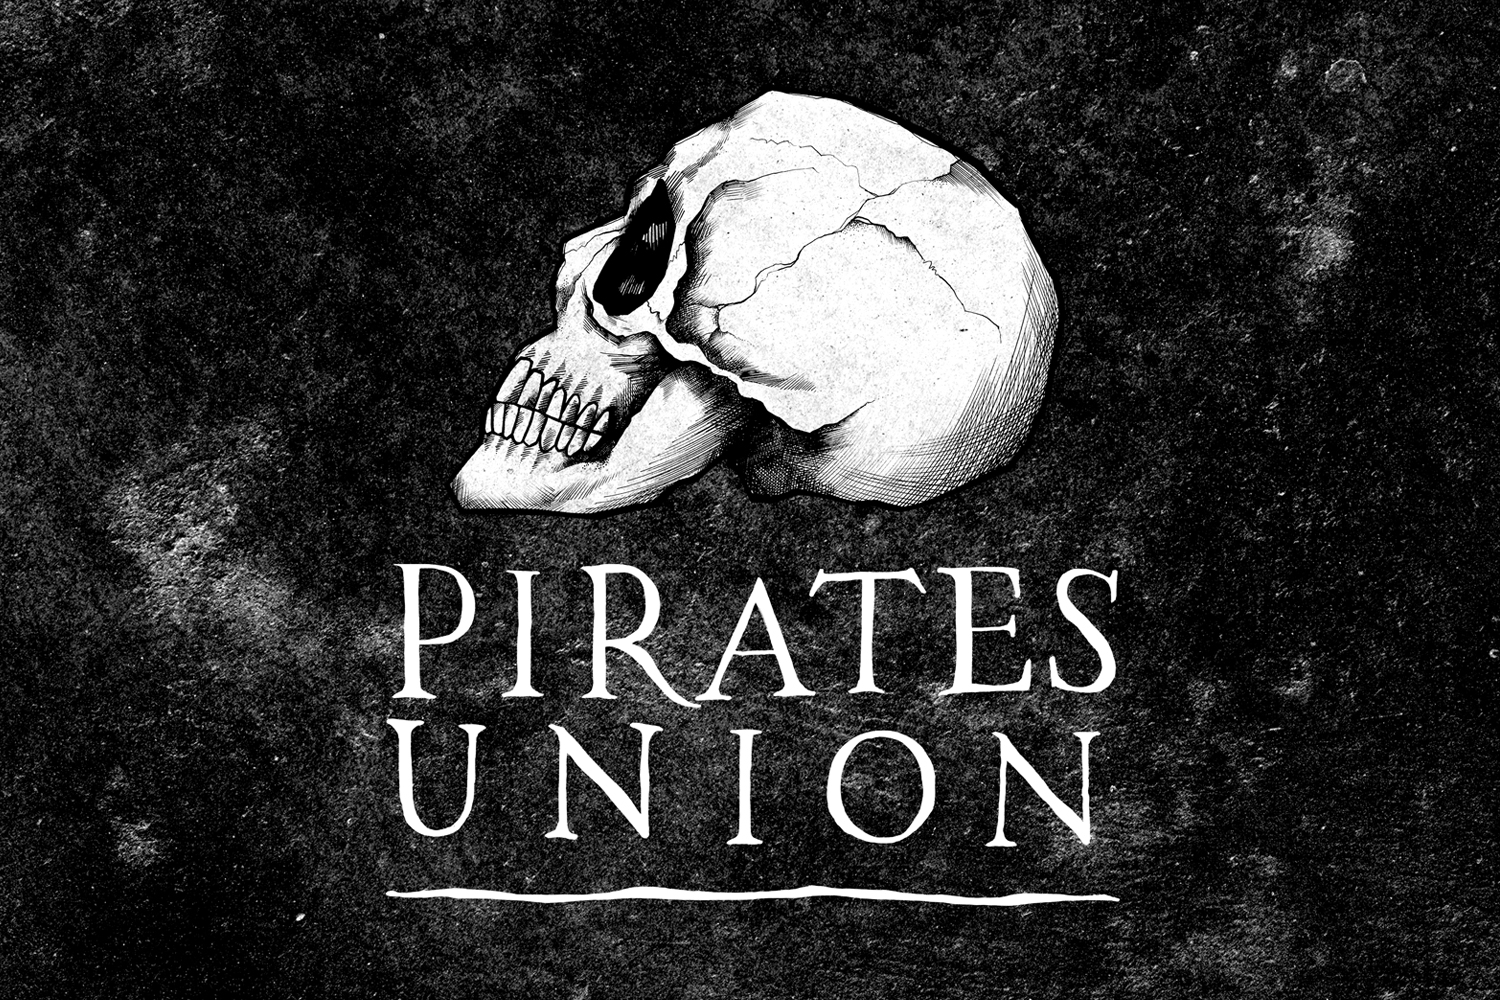 Pirates Union.